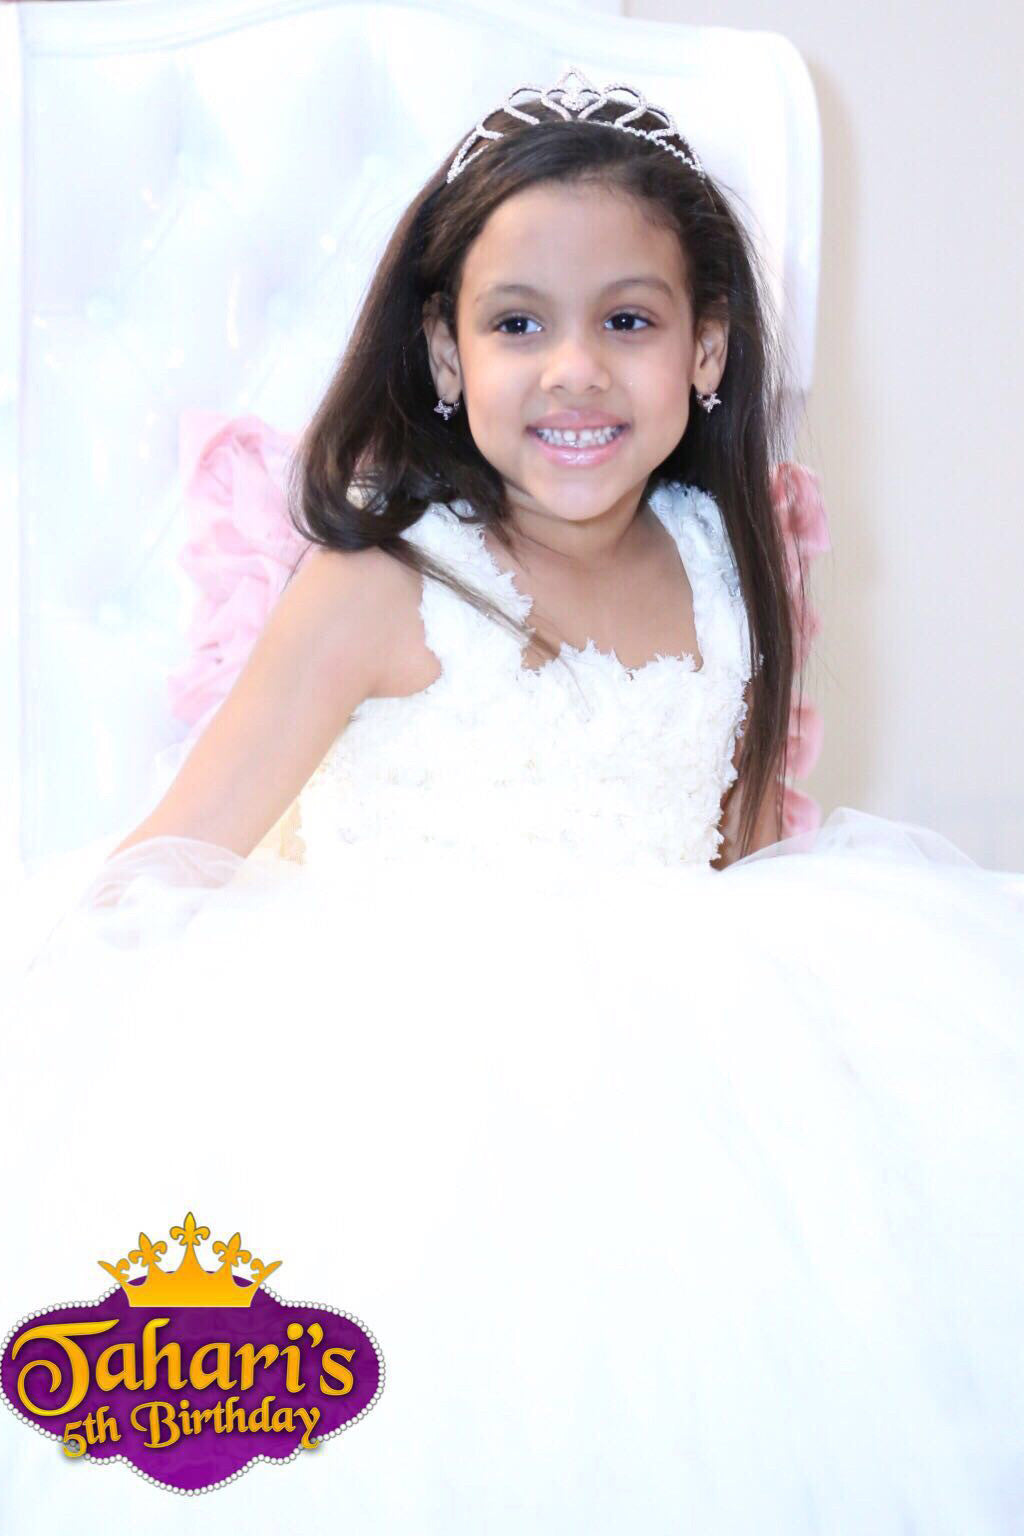 Ivory Flower Girl Tutu Dress Wedding Dress Pageant Dress Toddler Dress Tulle Dress Satin Straps